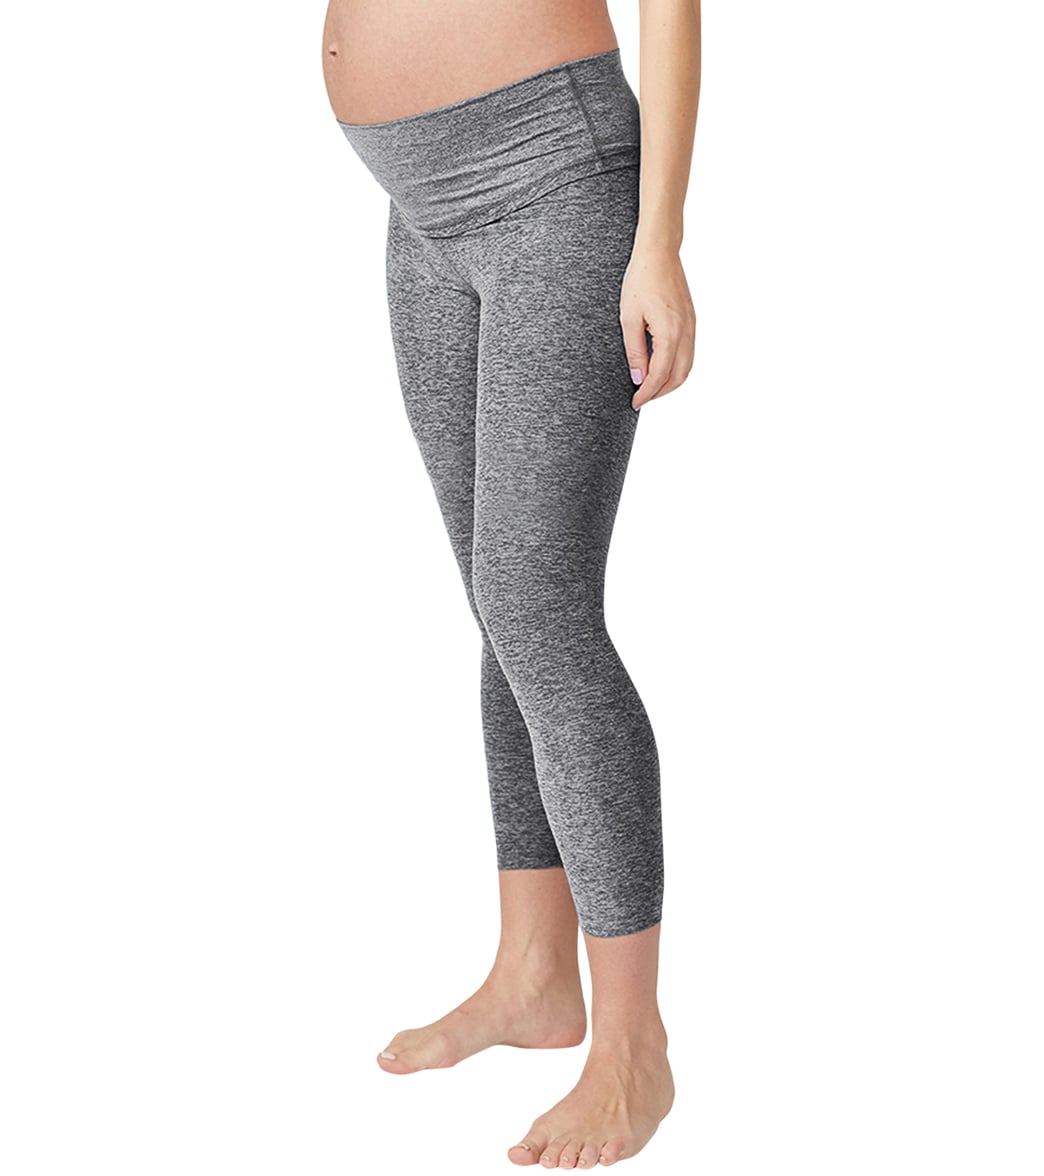 Buy Beyond Yoga Women's High Waist Capri Leggings at Amazon.in